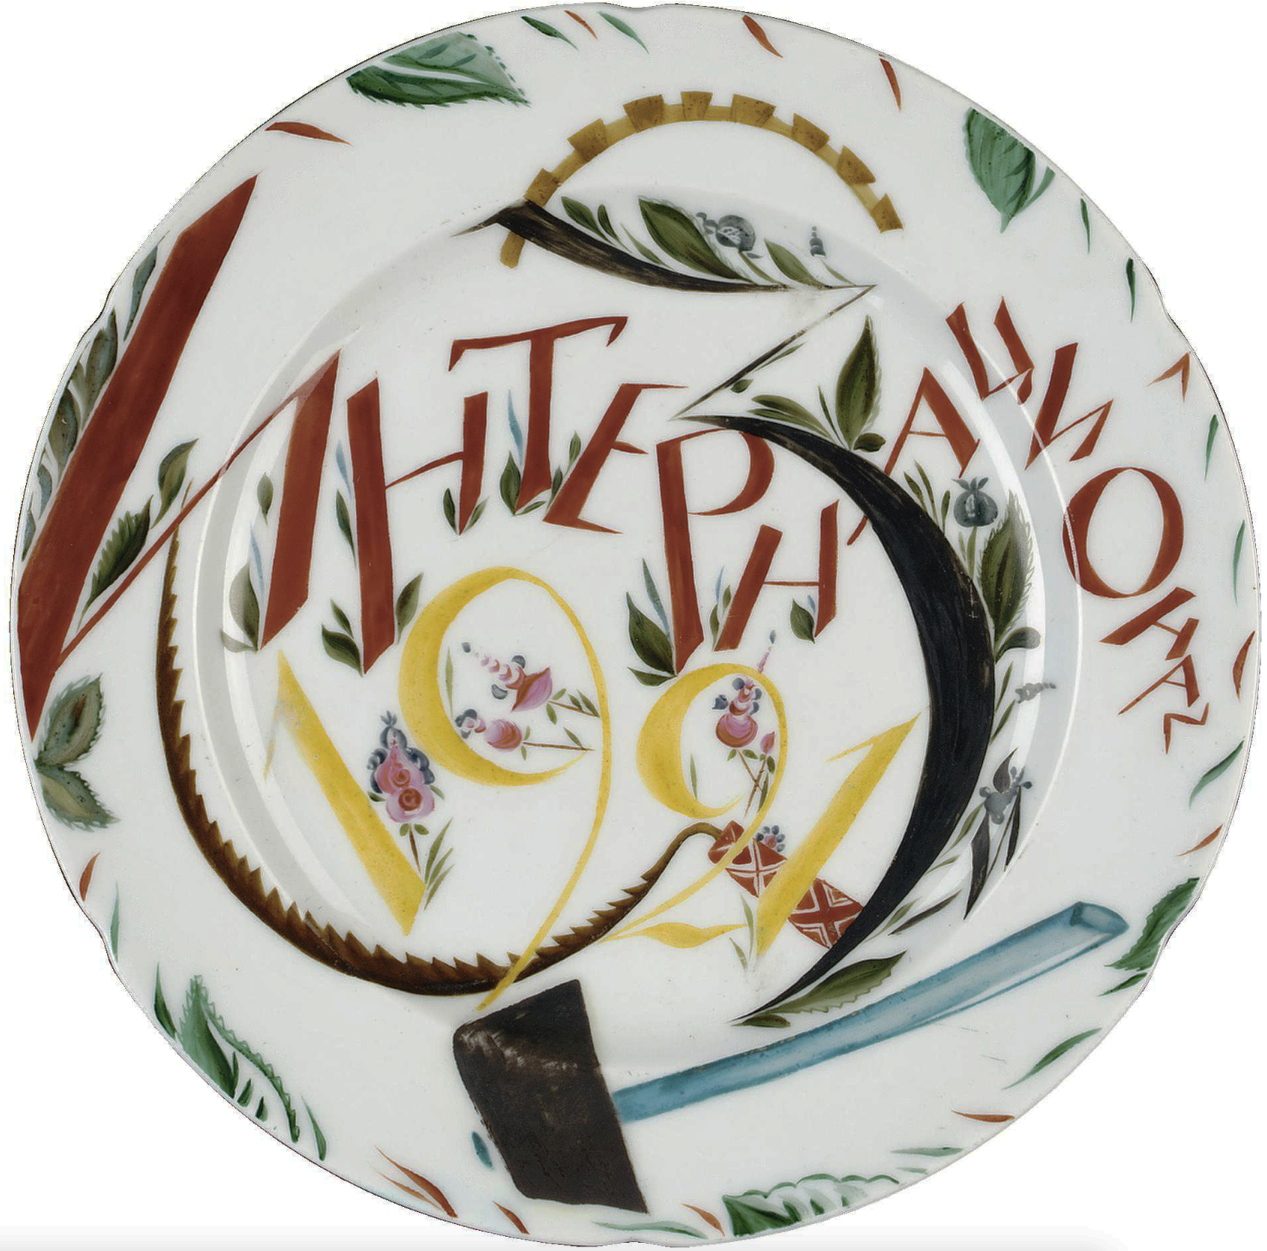 Soviet propaganda porcelain plate "3rd International" after Shchekotikhina-Pototskaya